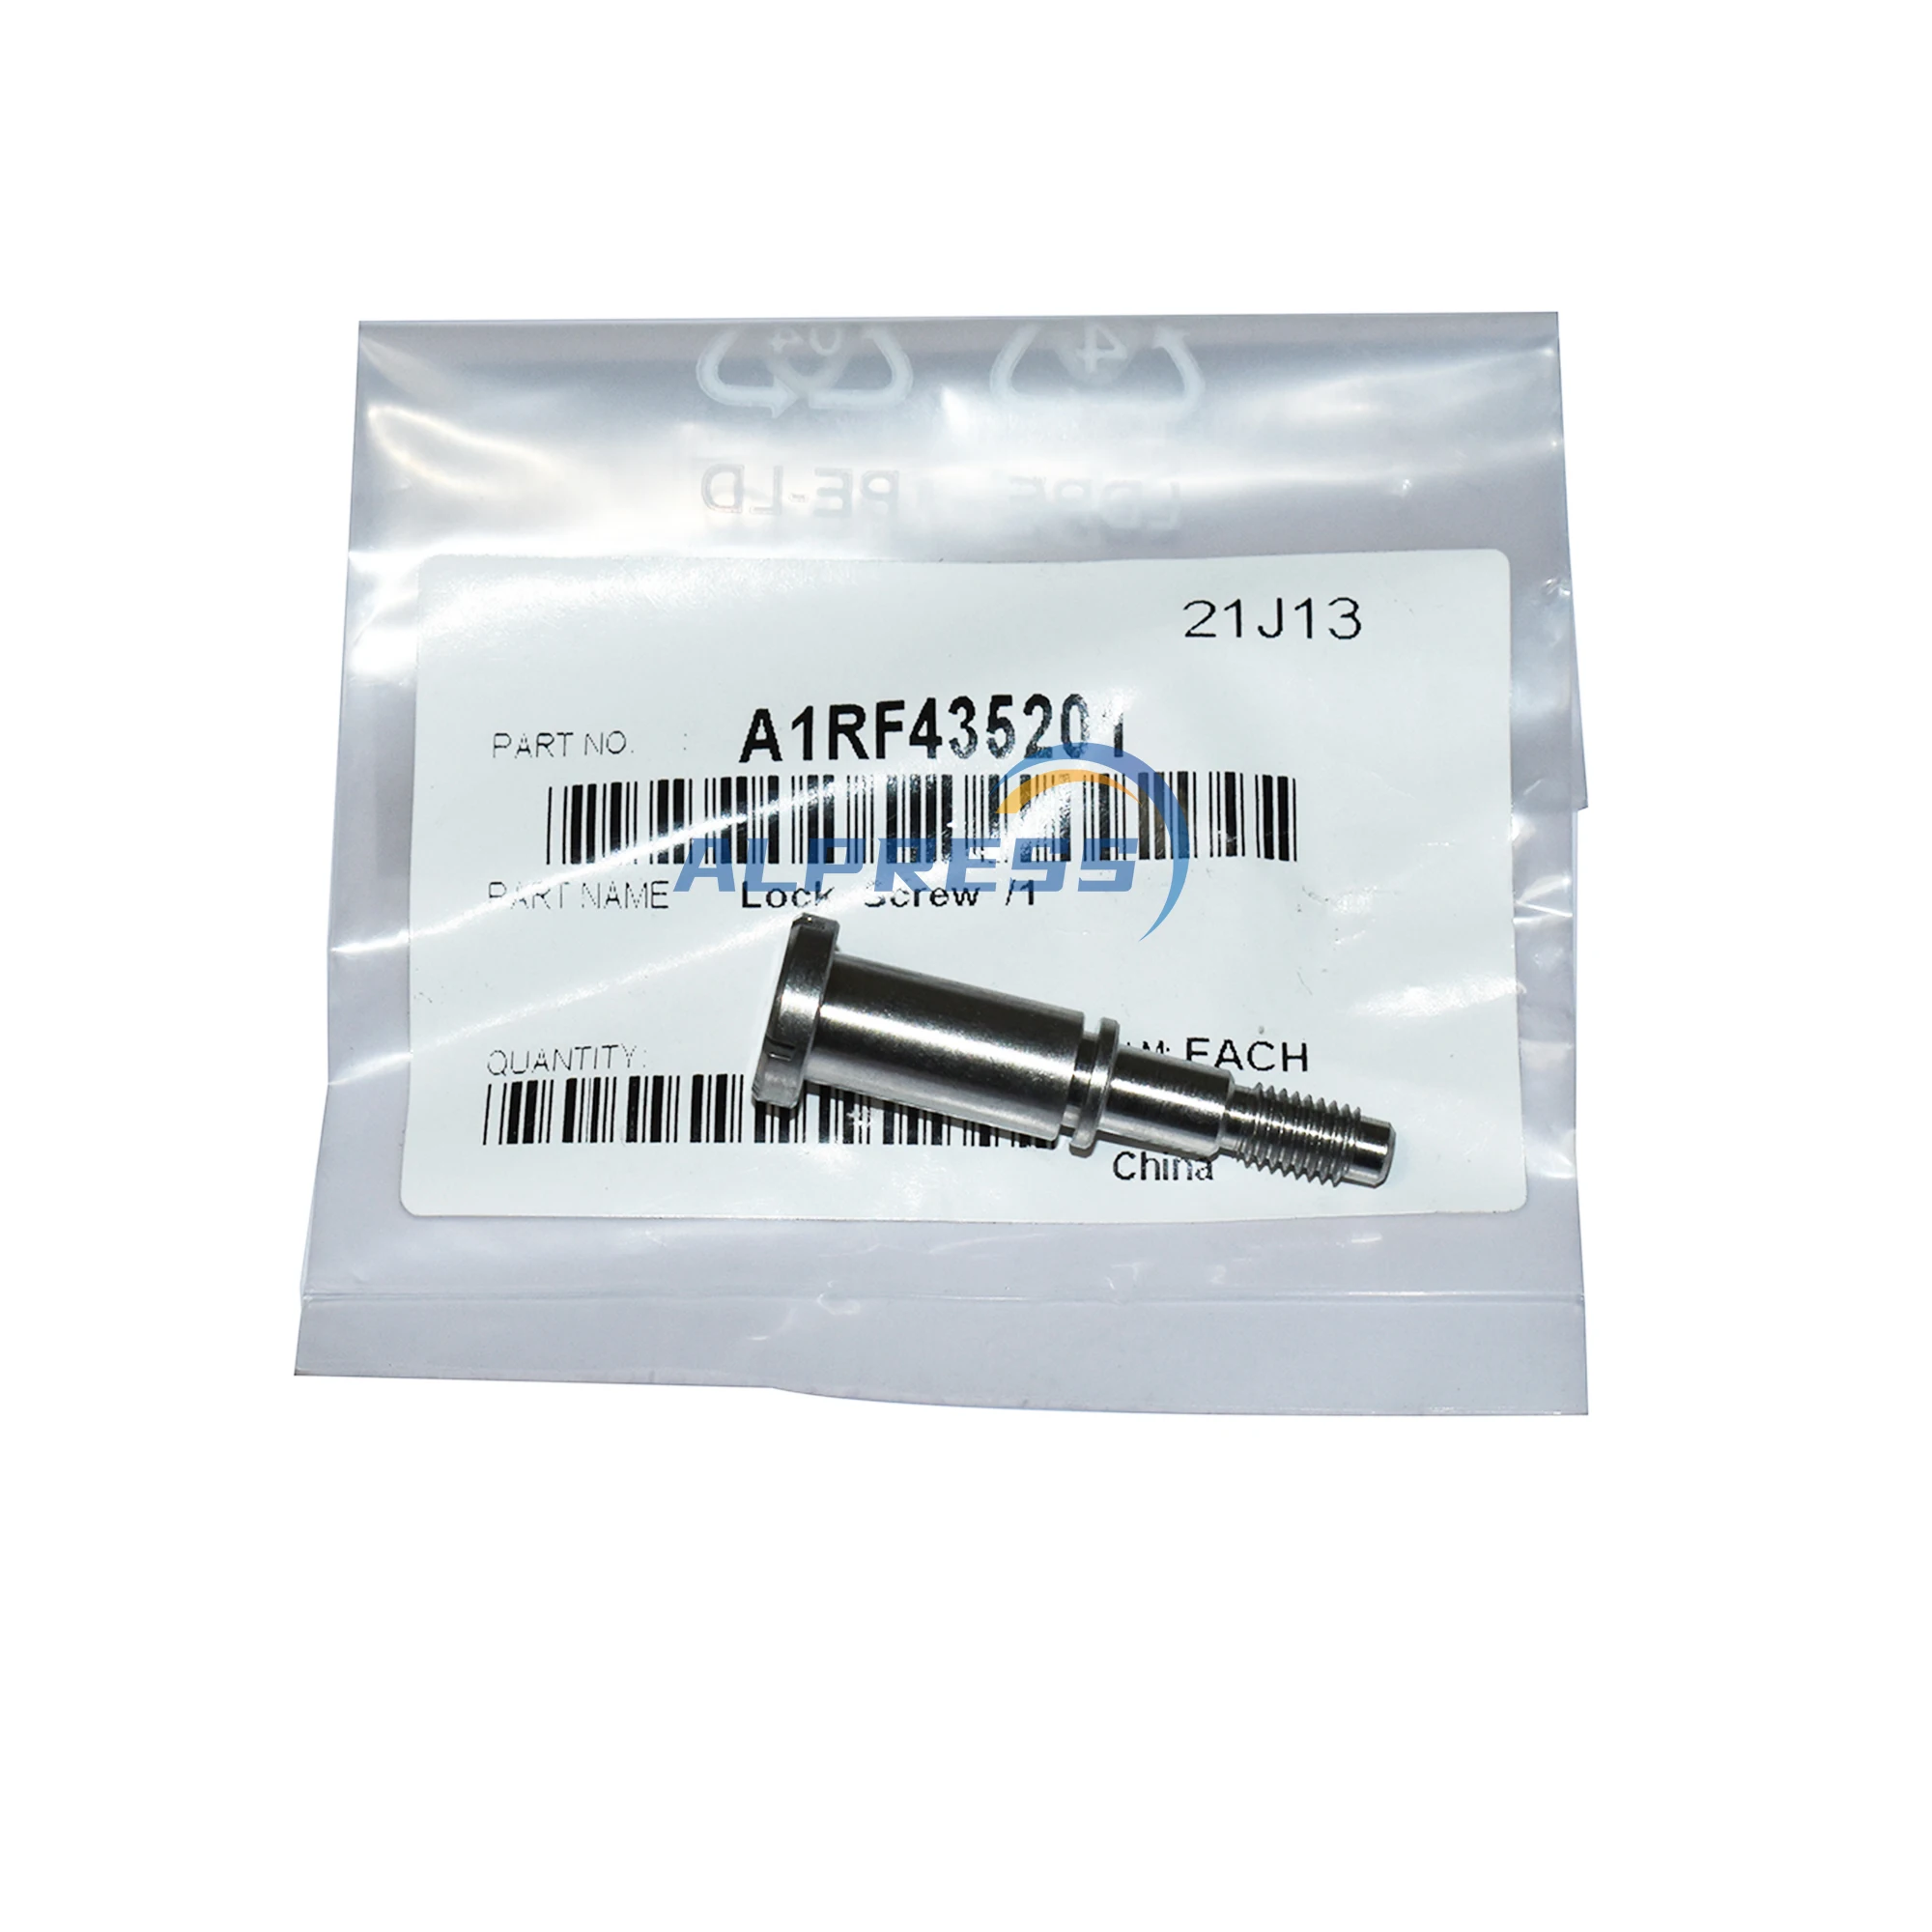 

A1RF435201 A1RF435200 Lock Screw /1 for Konica Minolta C6085 C6100 C1085 C1100 C8000